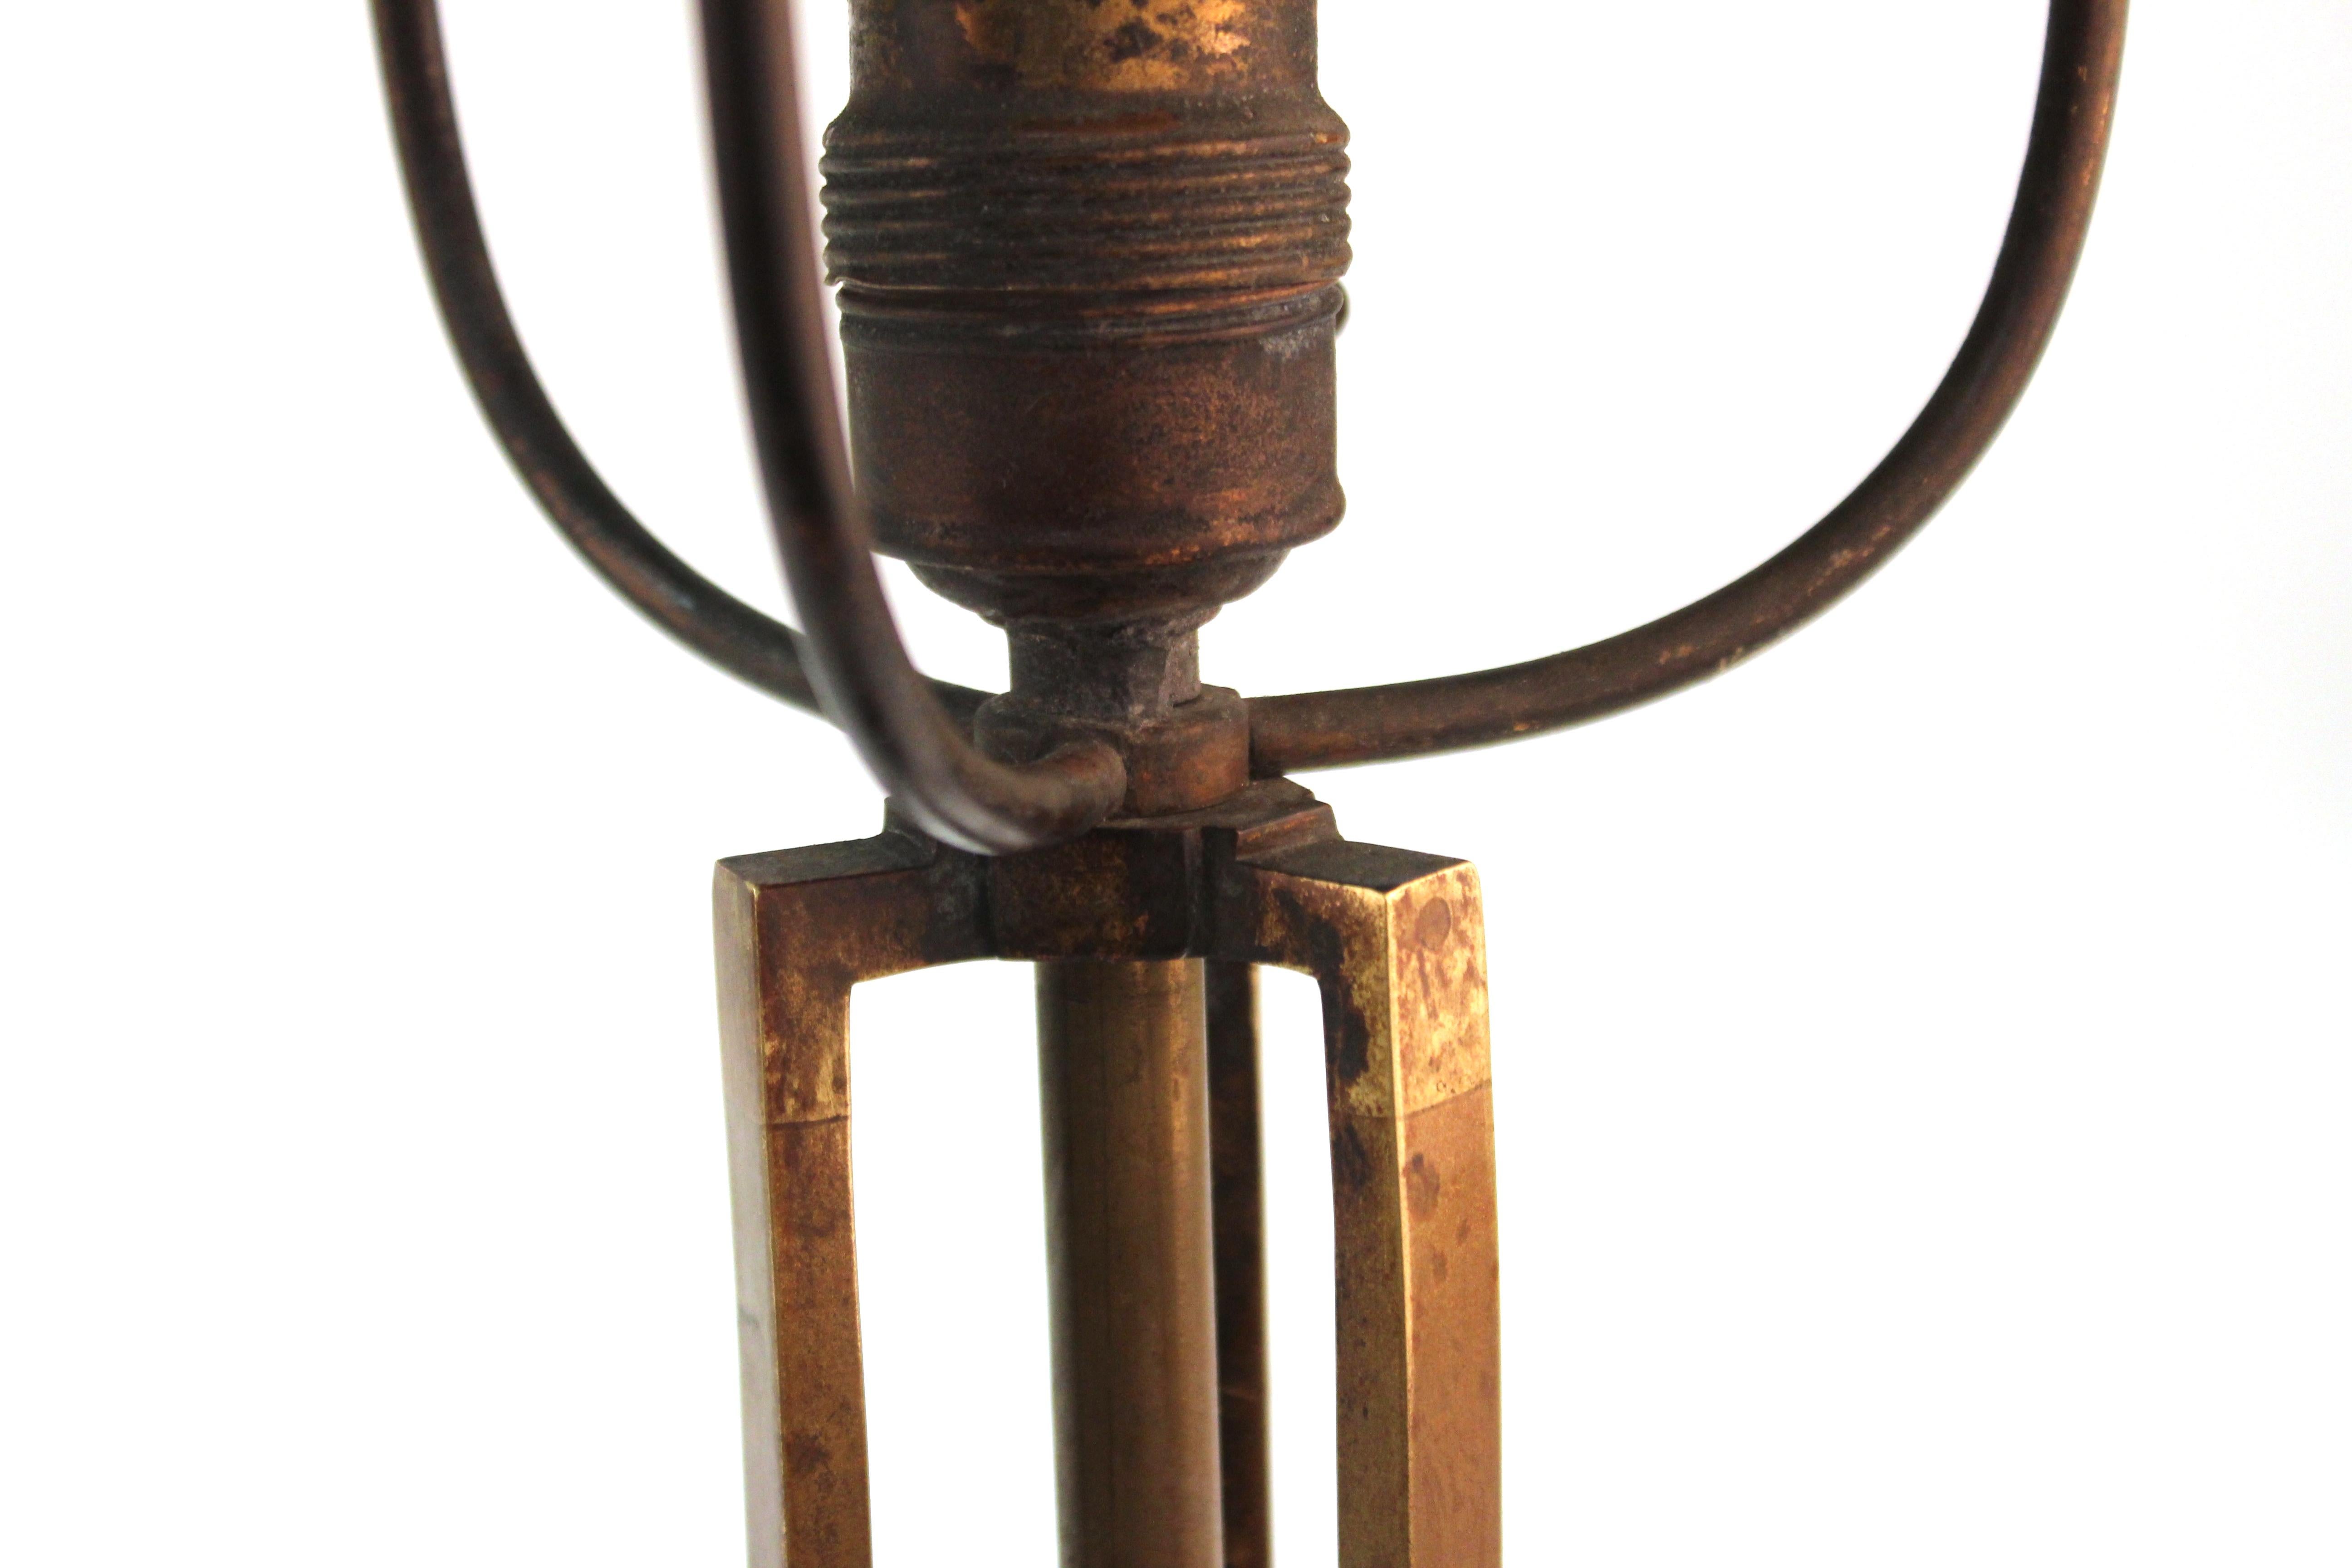 German Darmstadt Jugendstil Table Lamp Attributed to Peter Behrens 1